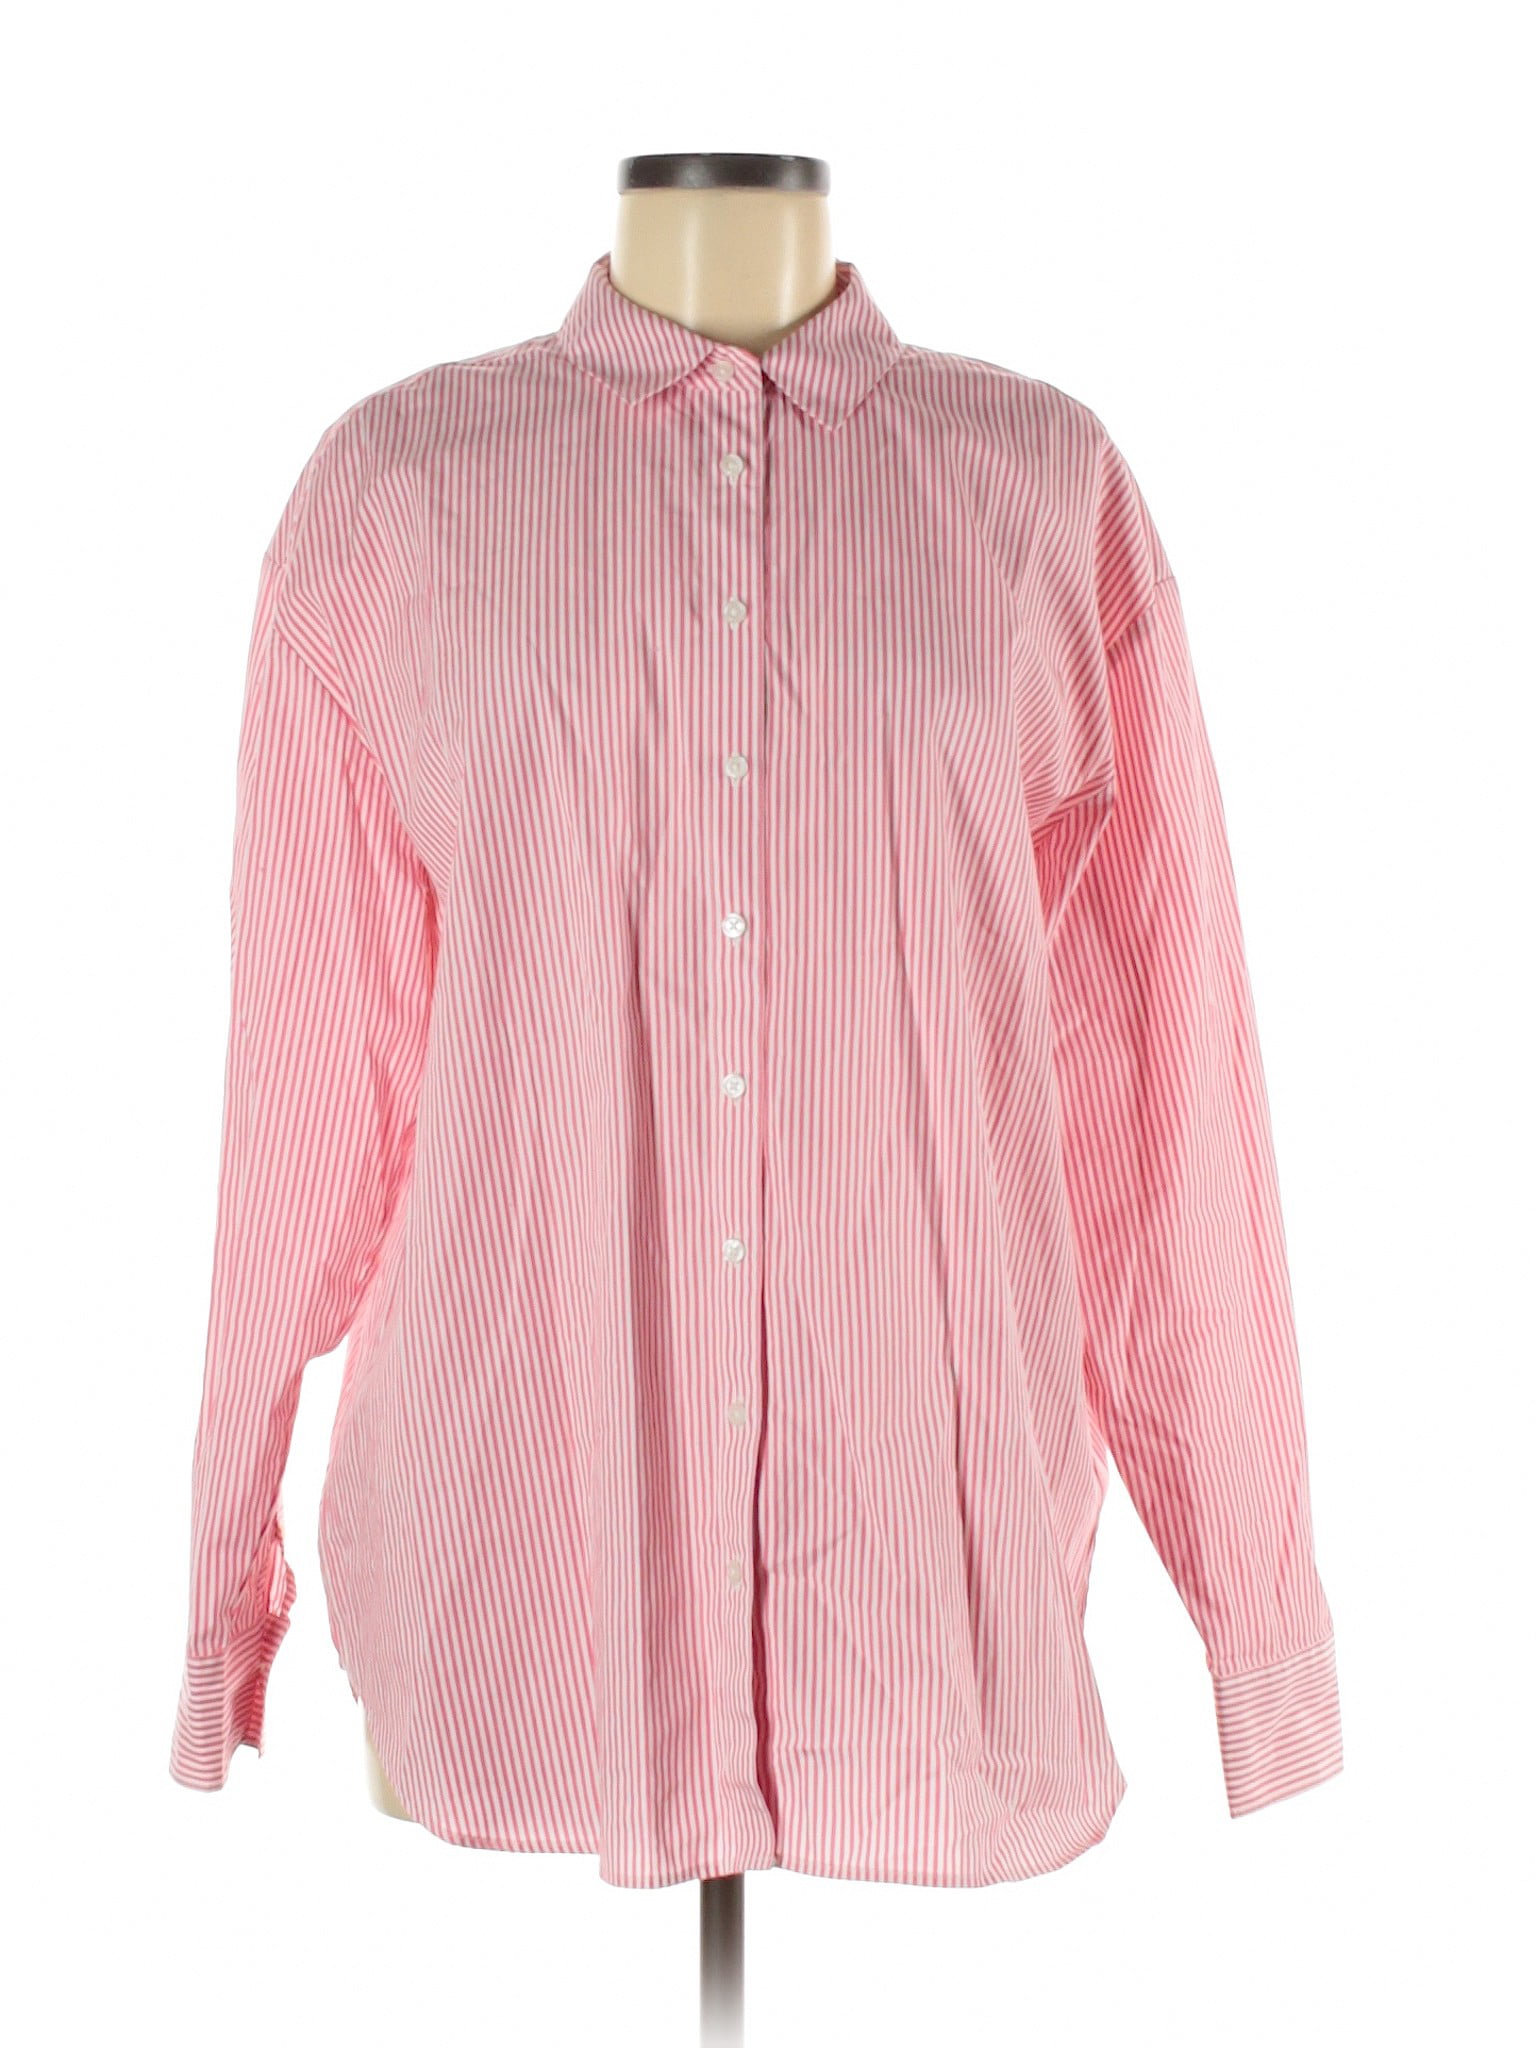 Boden - Pre-Owned Boden Women's Size 8 Long Sleeve Button-Down Shirt ...